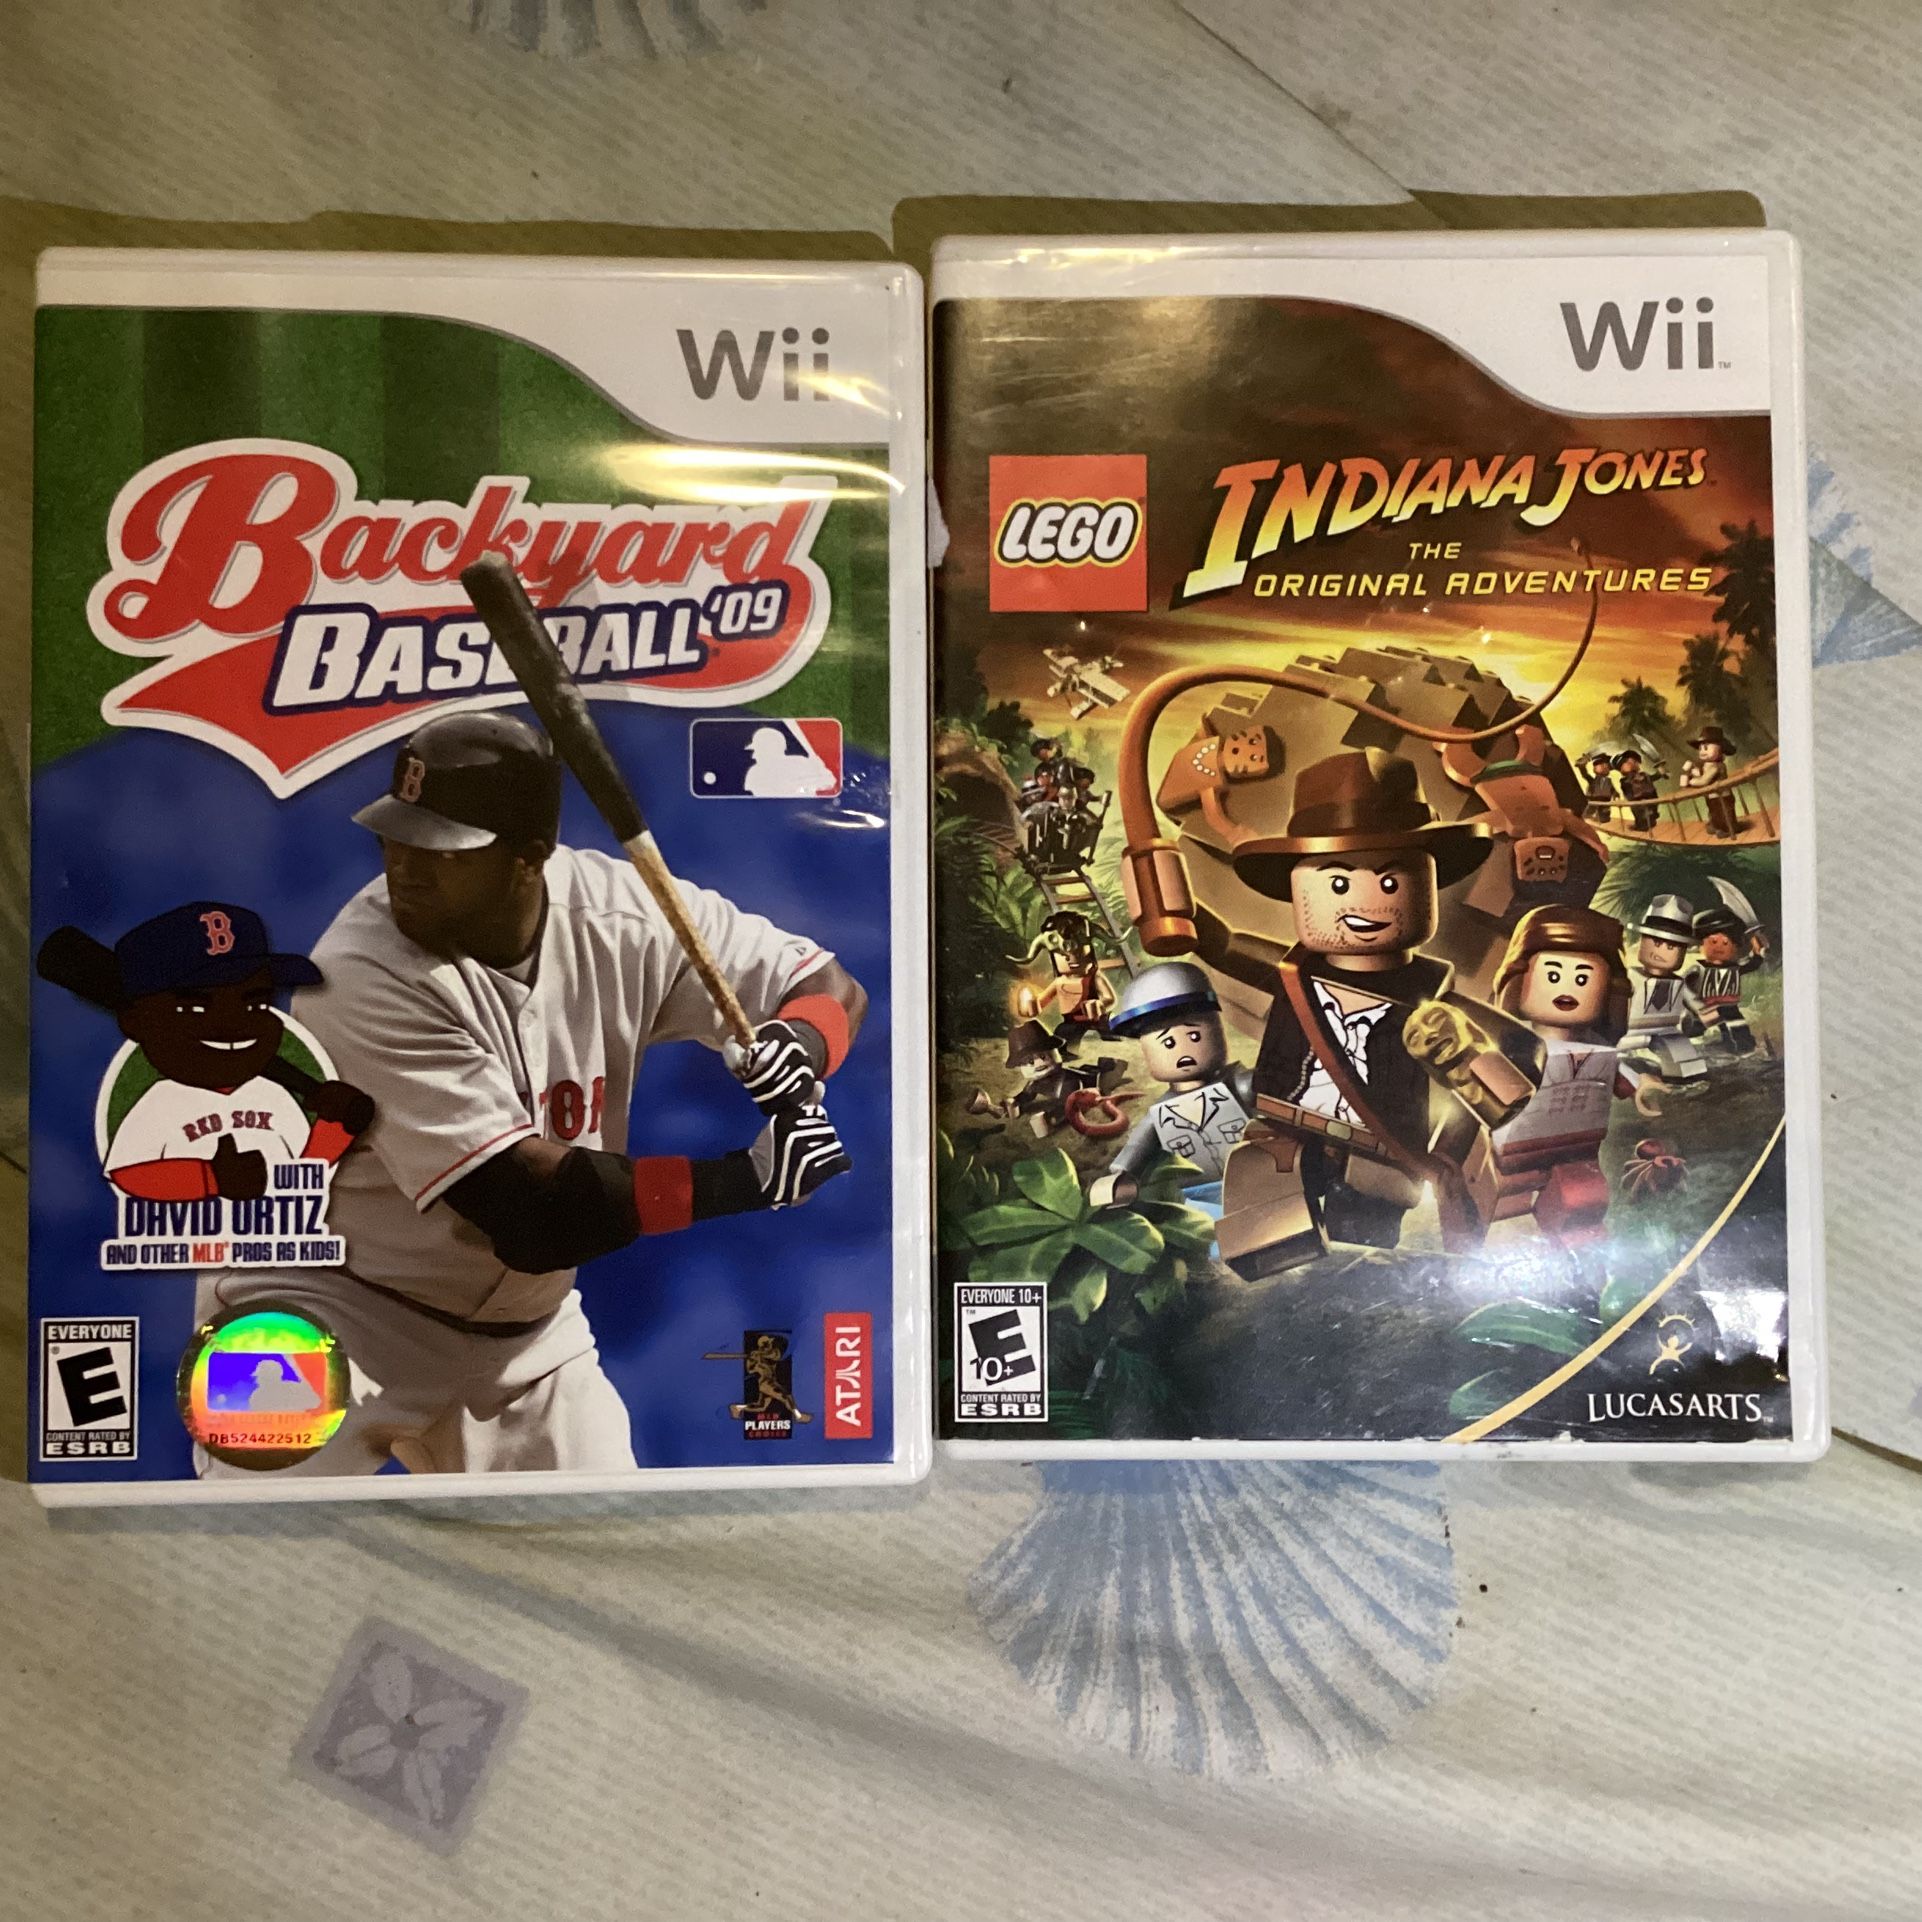 Backyard Baseball 09 & Lego Indiana Jones original adventure for Nintendo Wii